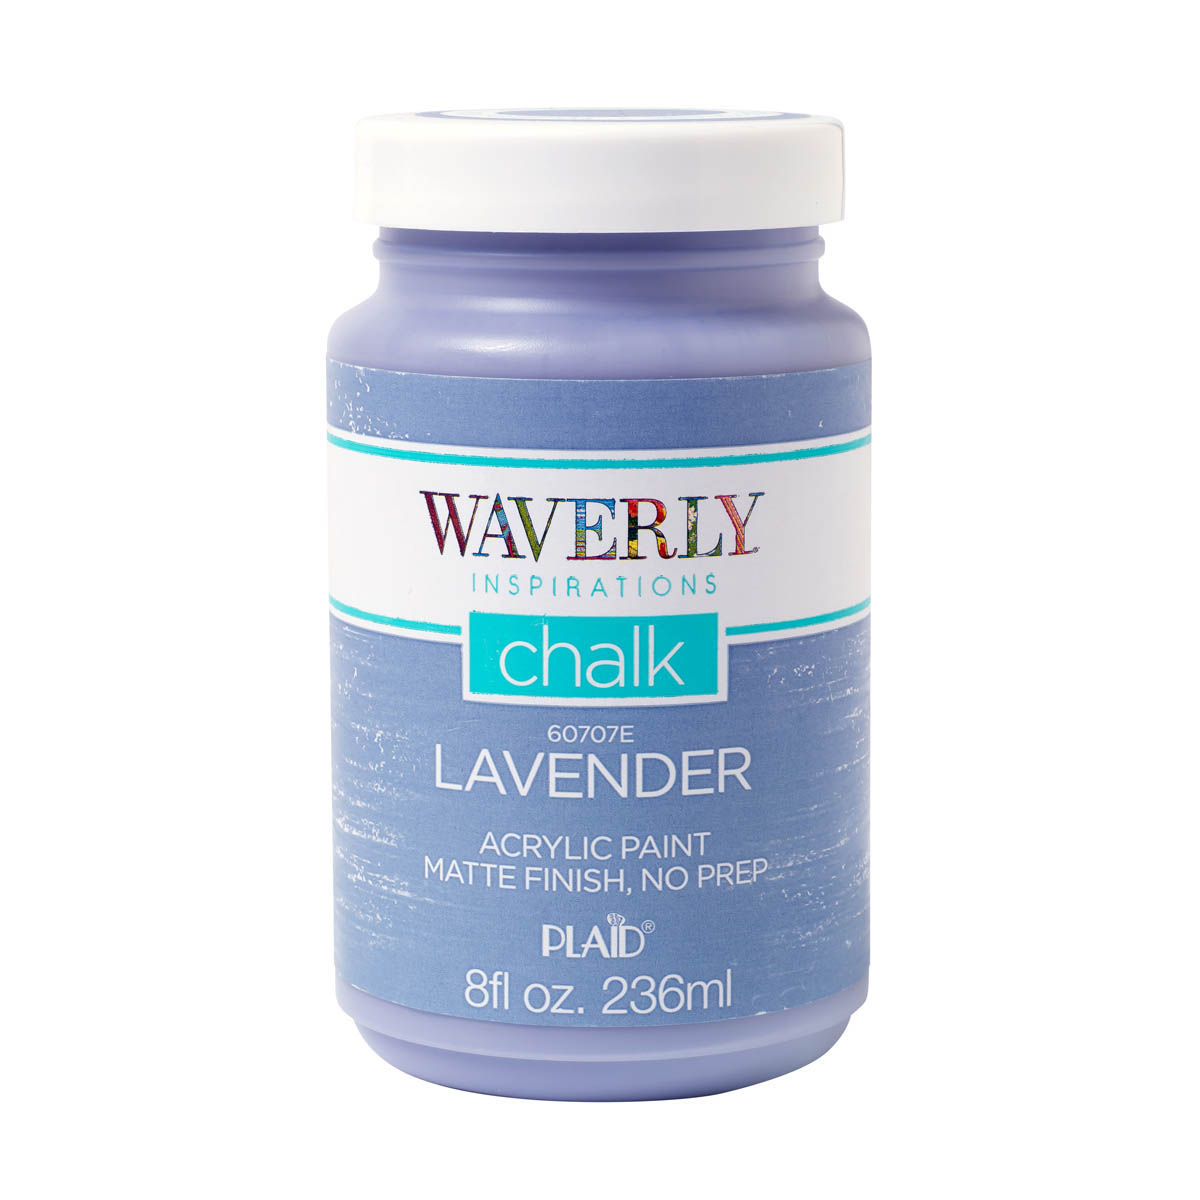 Waverly ® Inspirations Chalk Acrylic Paint - Lavender, 8 oz. - 60707E